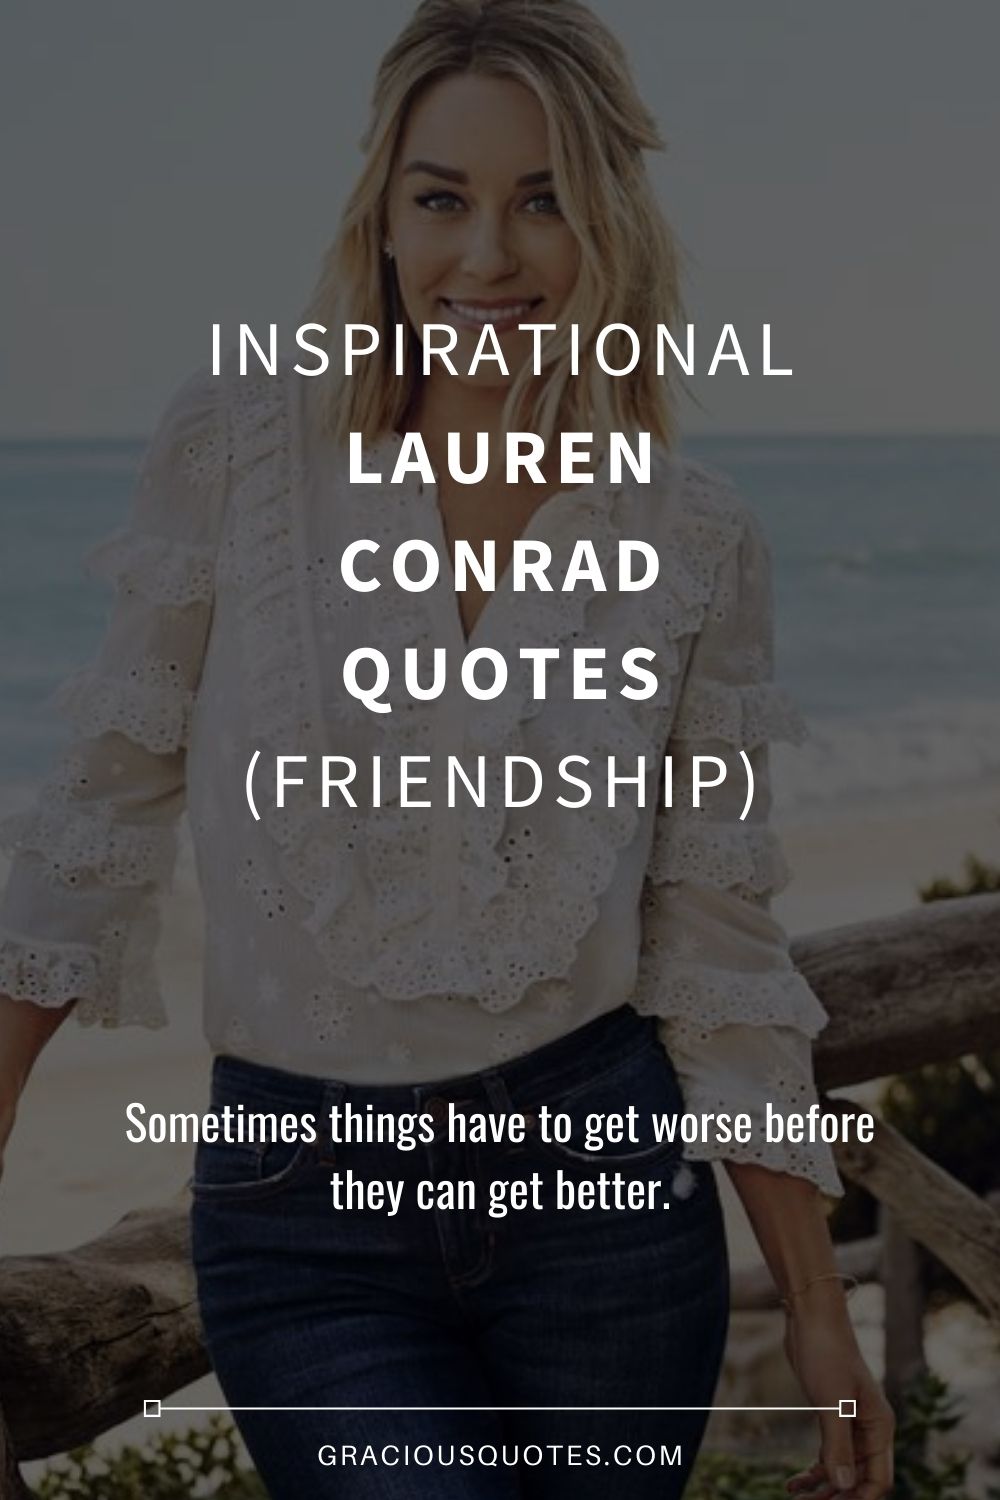 Lauren Conrad: Don't Be Afraid to Learn as You Go, Entrepreneurs!